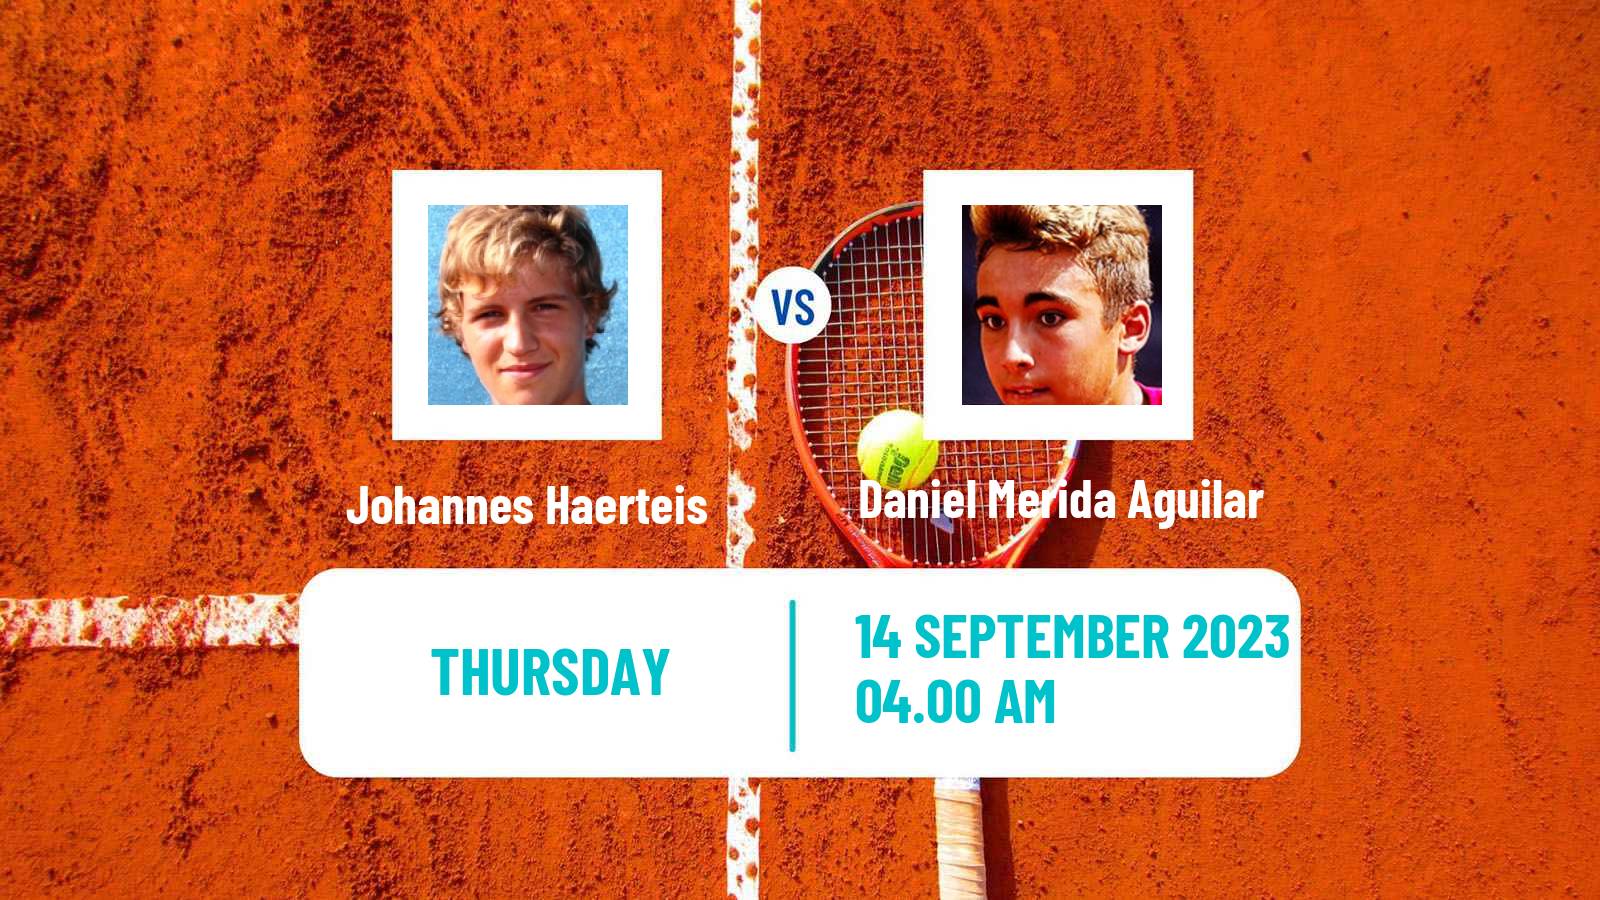 Tennis ITF M25 Madrid Men Johannes Haerteis - Daniel Merida Aguilar